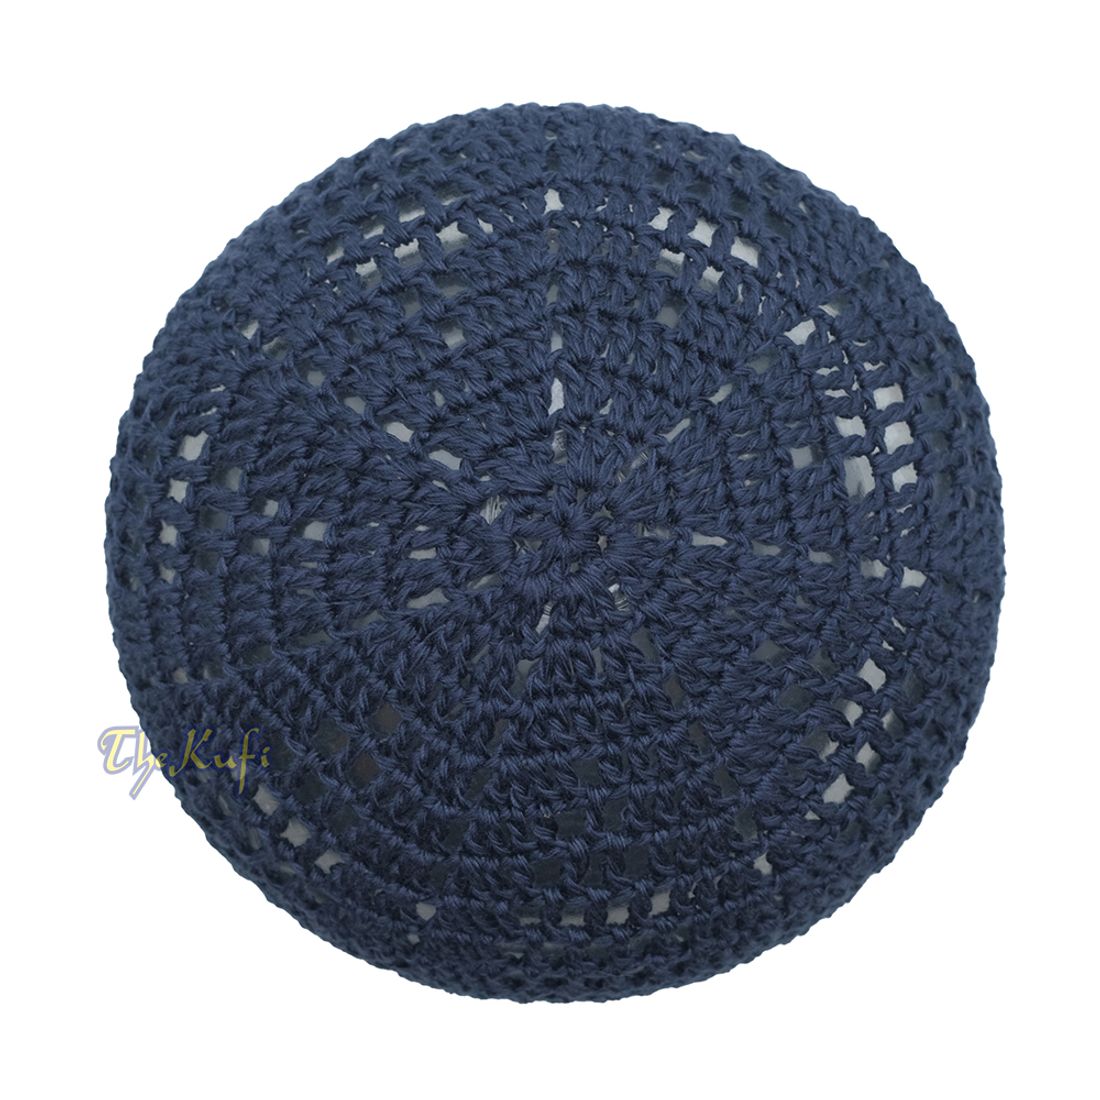 Skull Cap Kufi Cotton Dark Blue Open-weave Design Crochet Knit Head Cover